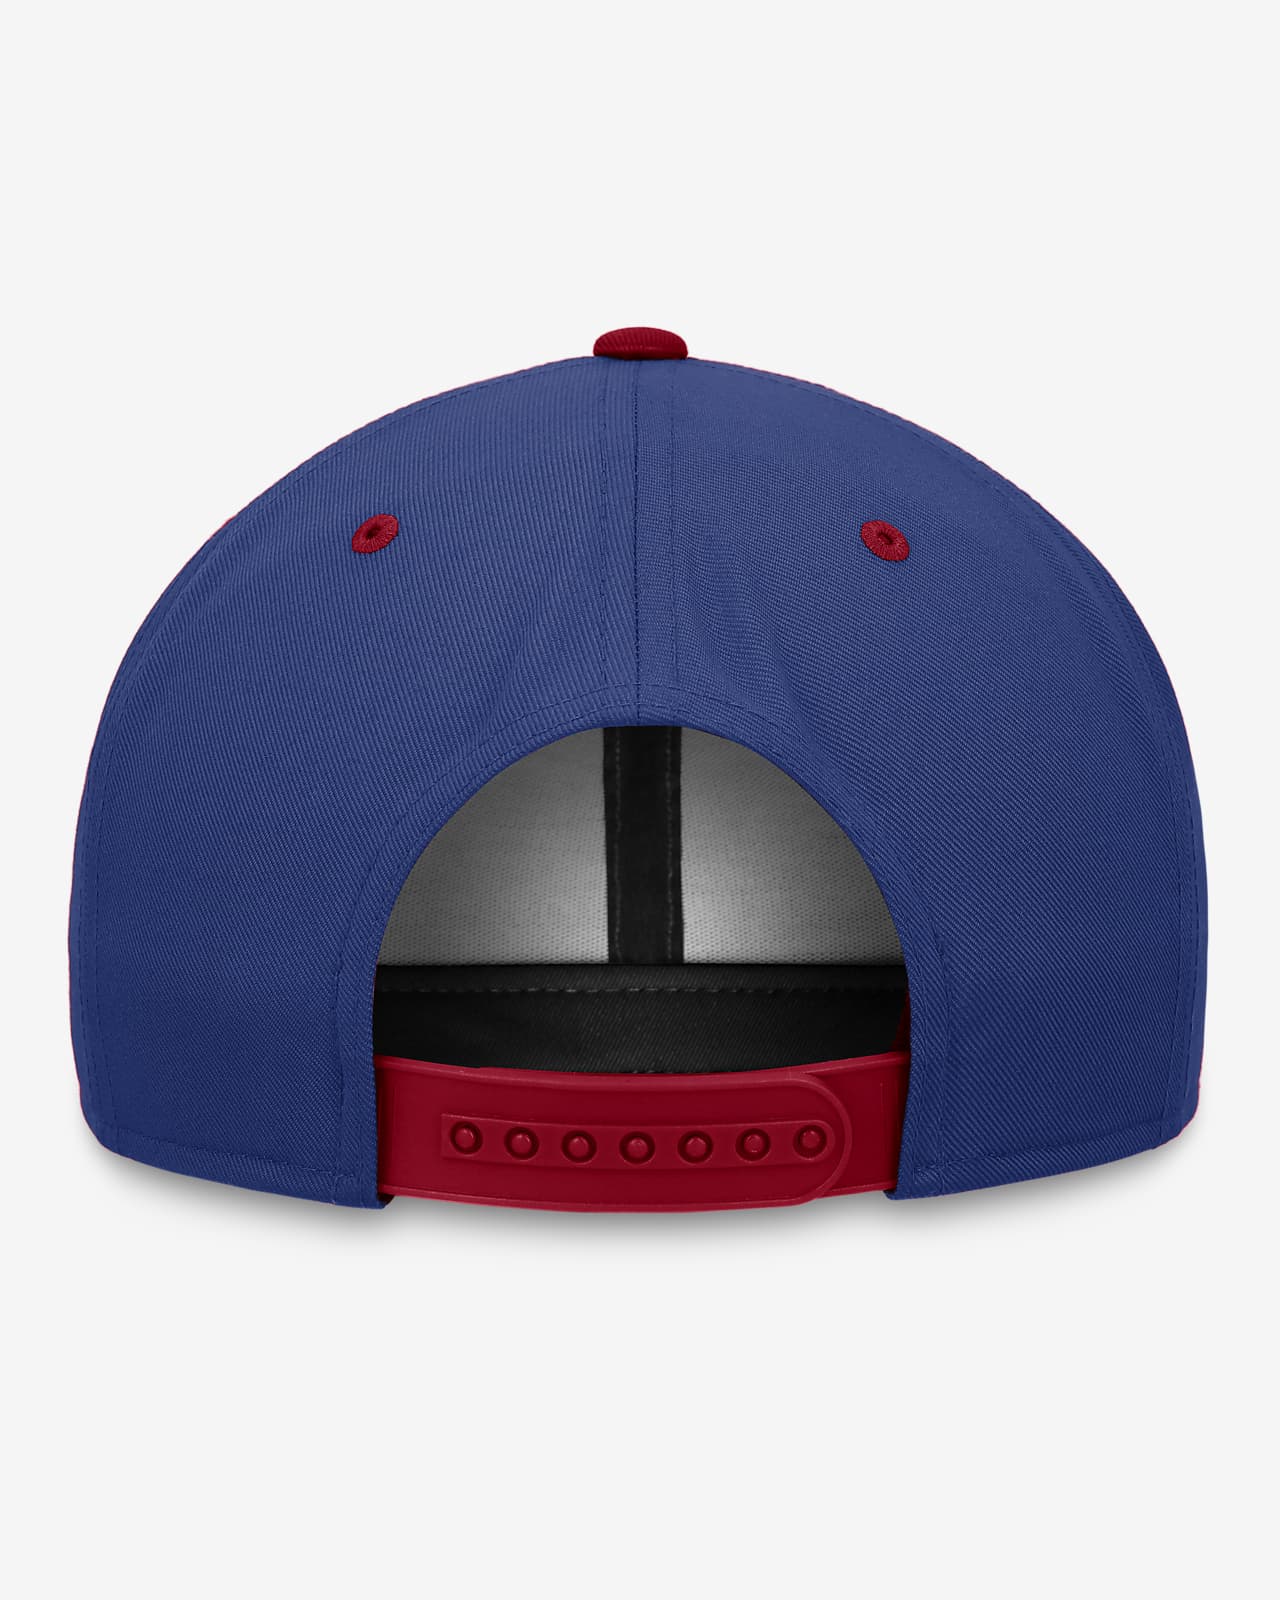 Nike New York Yankees Blue Classic Snapback Adjustable Hat